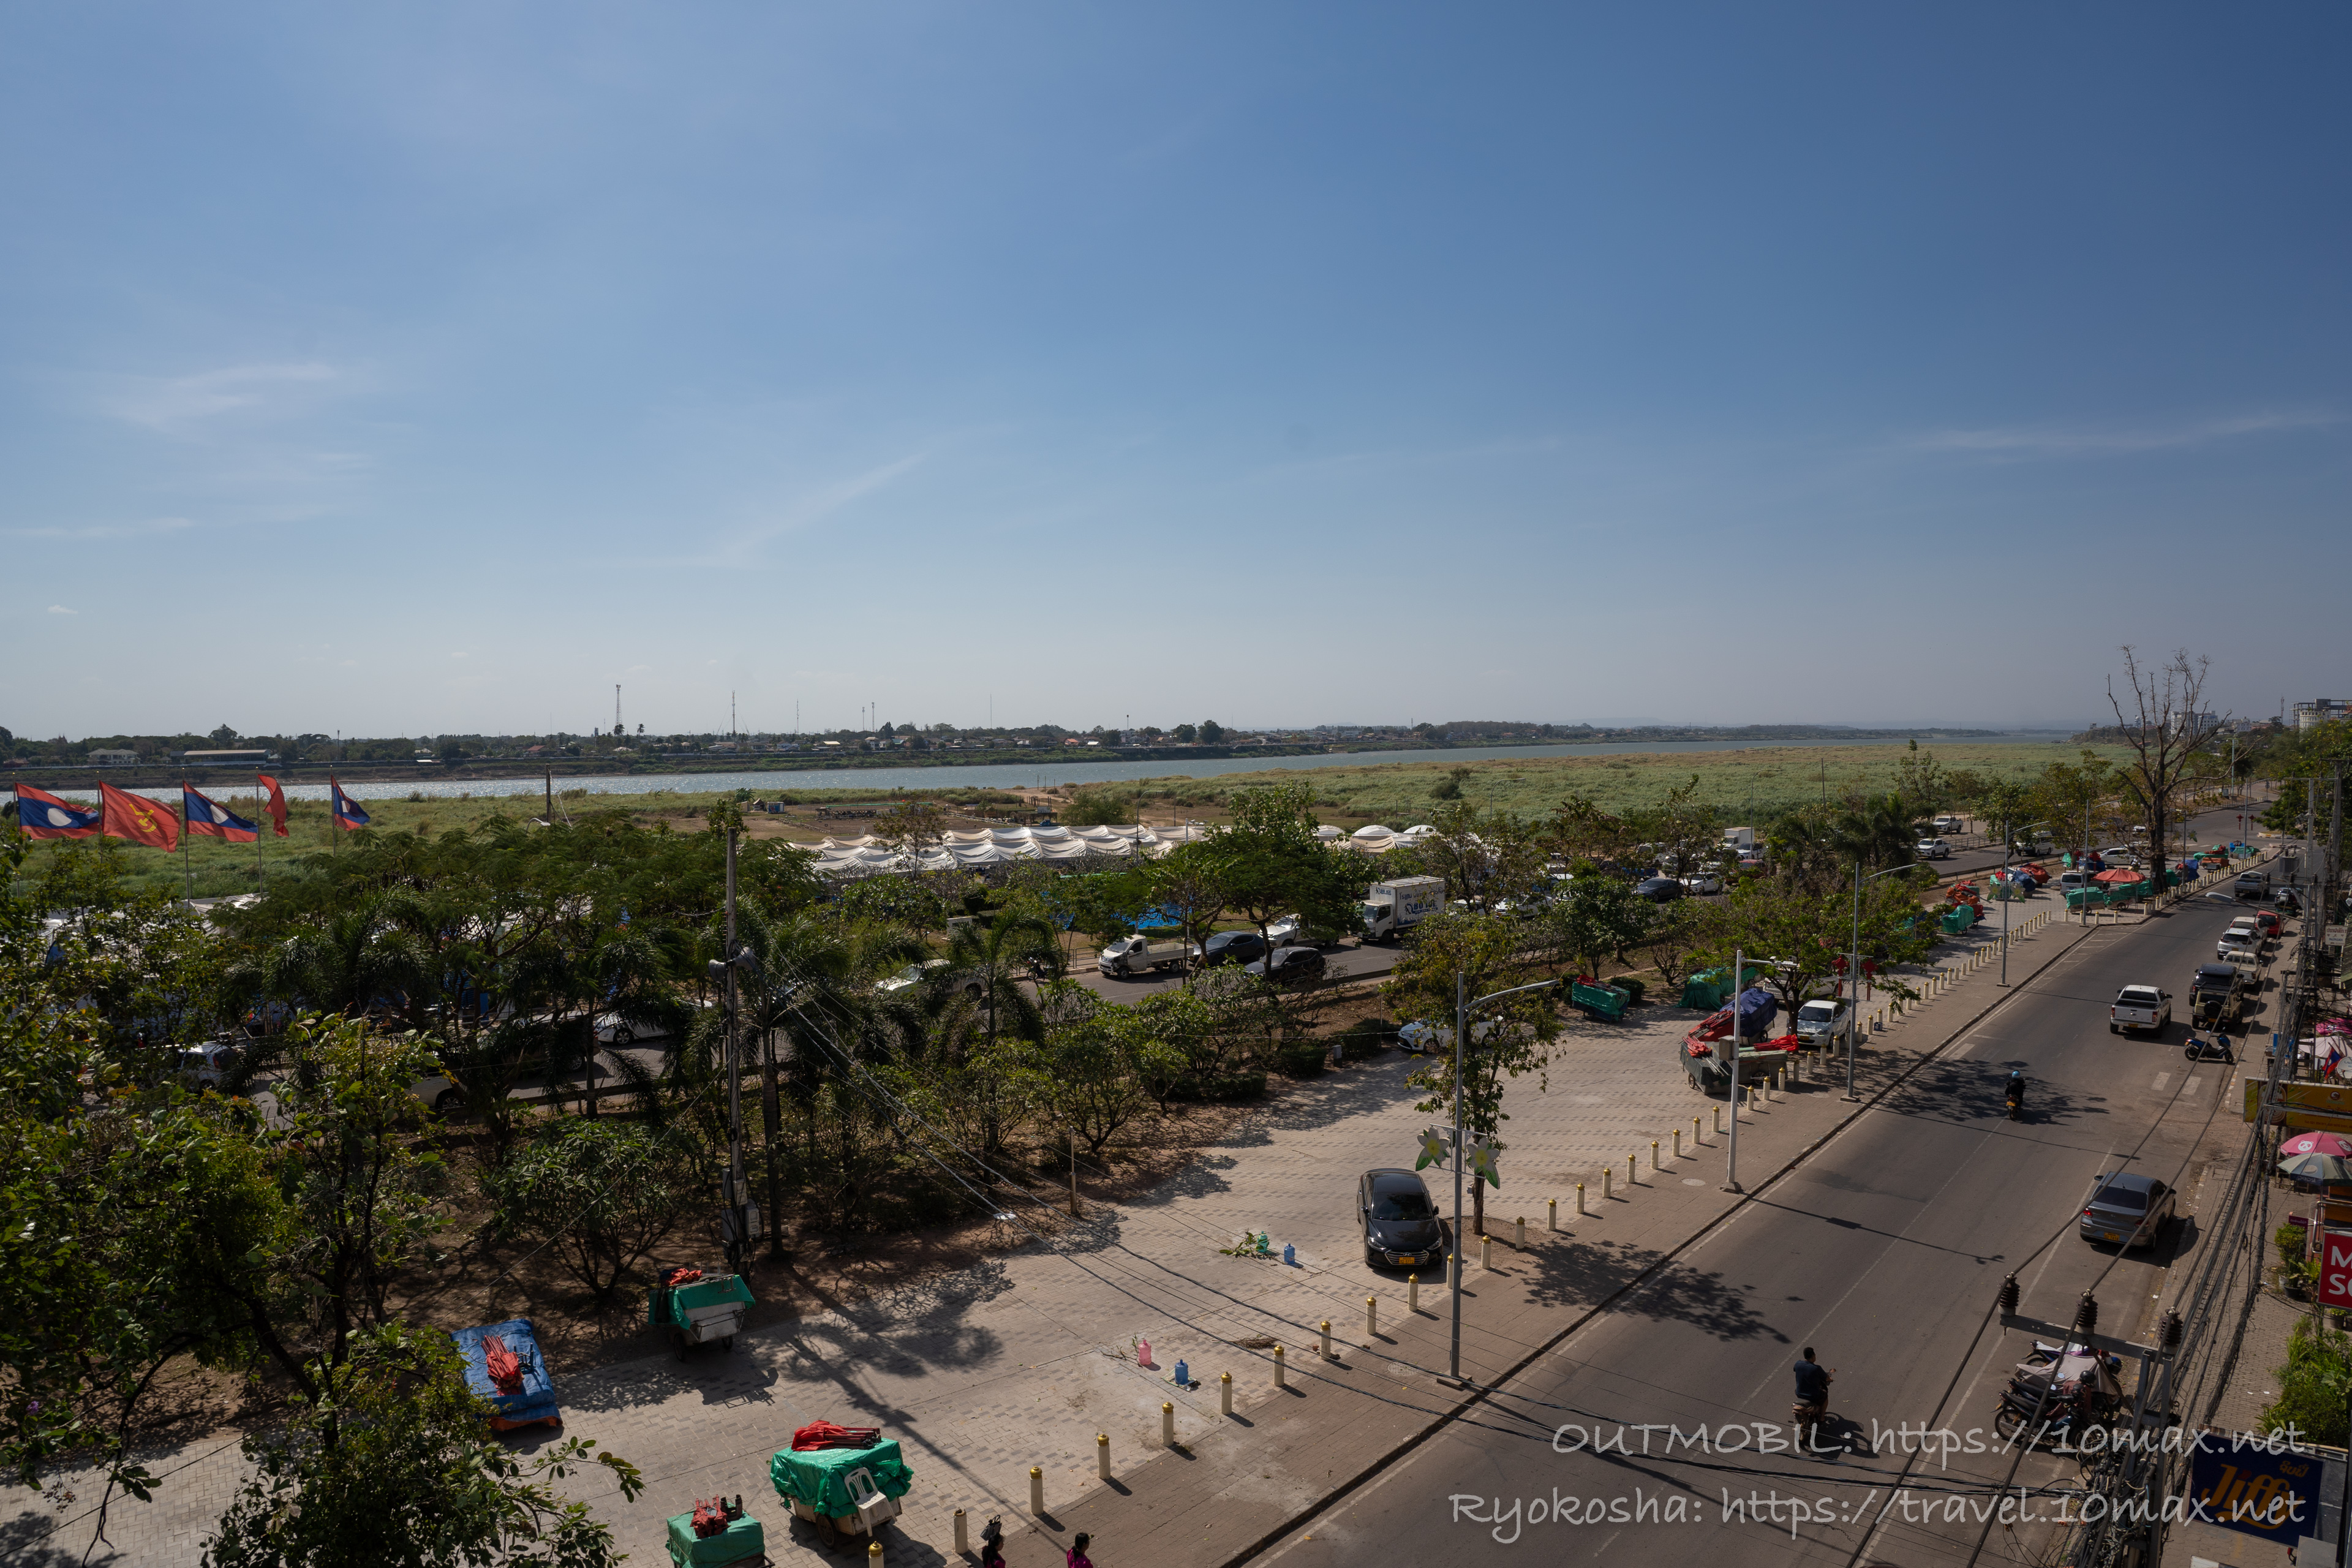 The Riva Vientiane Hotelの客室からの眺望, ビエンチャンのおすすめ中級ホテル, ファミリー, メコン川リバービュー